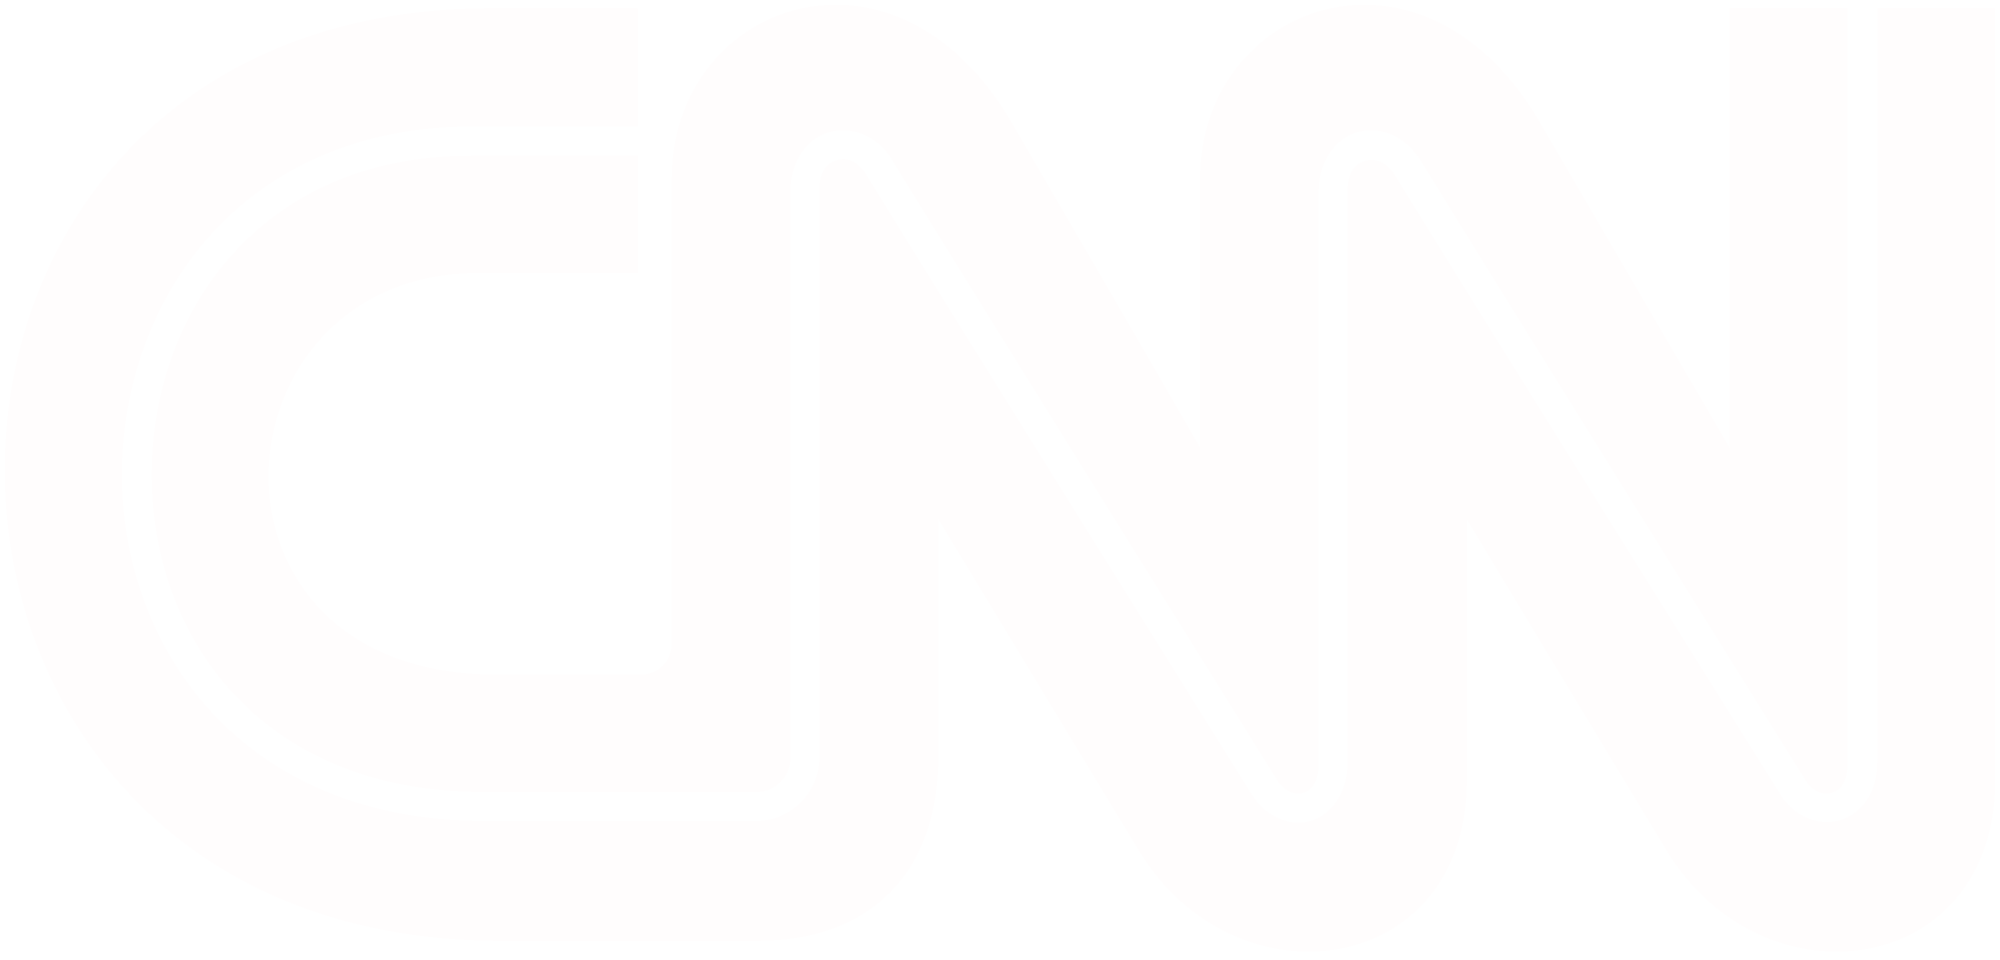 CNN.png